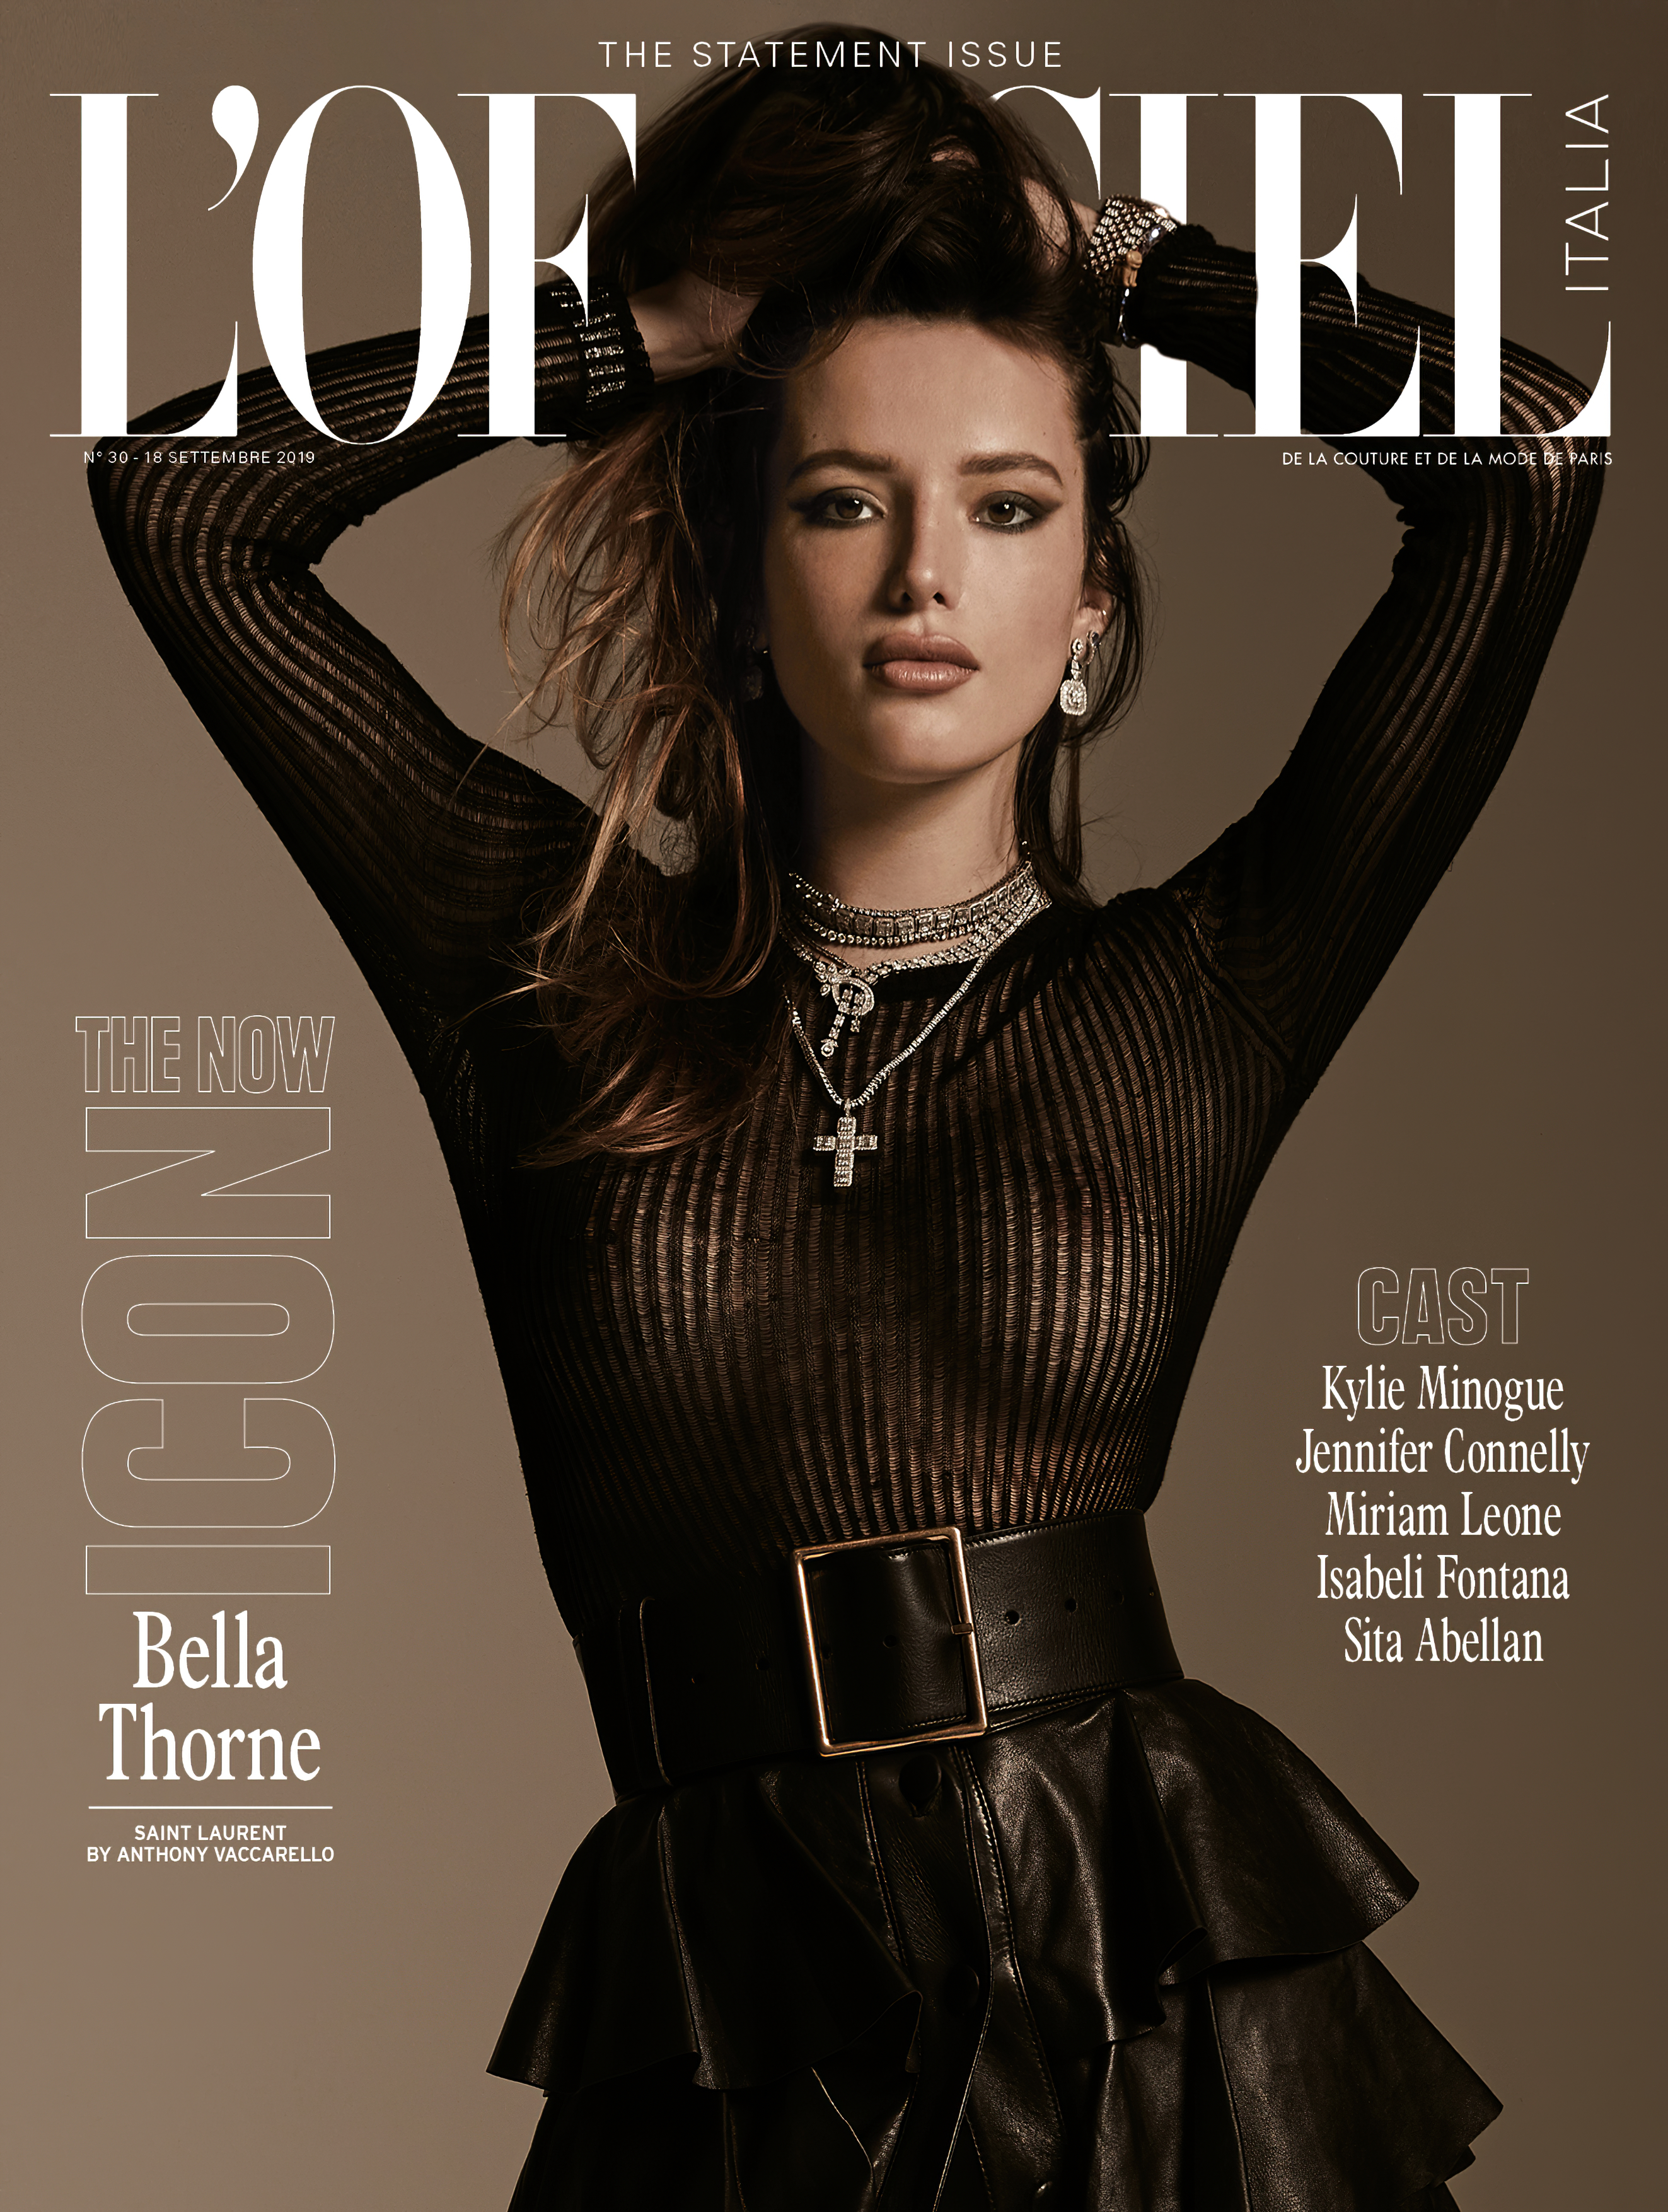 Bella Thorne braless in see thru top on L'officiel Italia magazine cover September 2019 UHQ (2).jpg